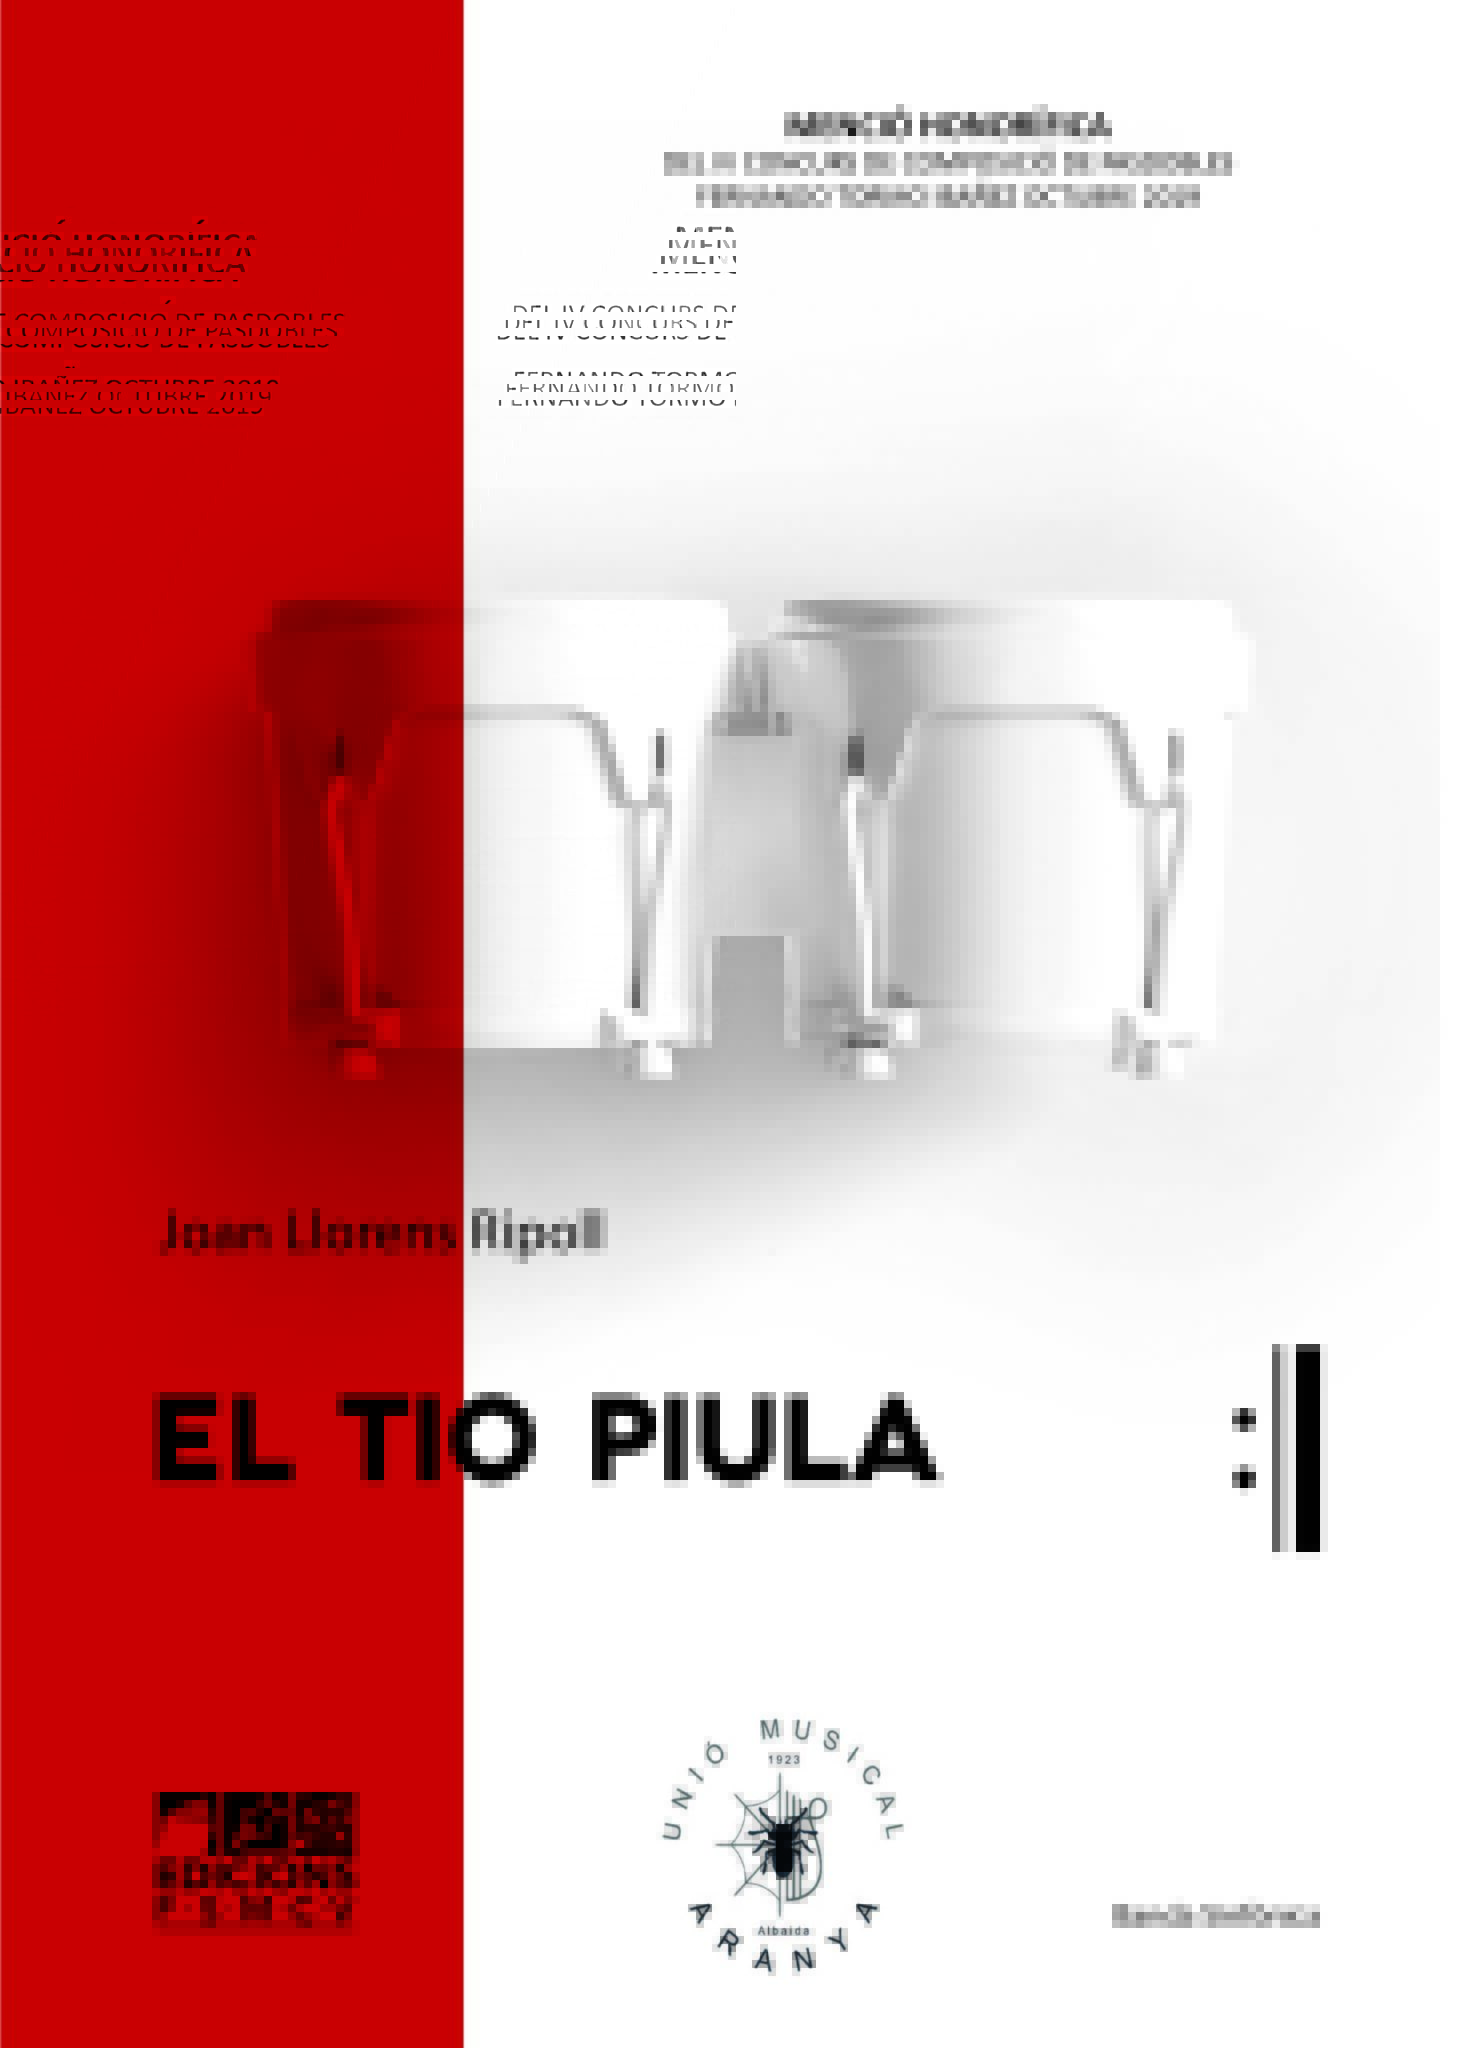 11. EL TIO PIULA scaled scaled